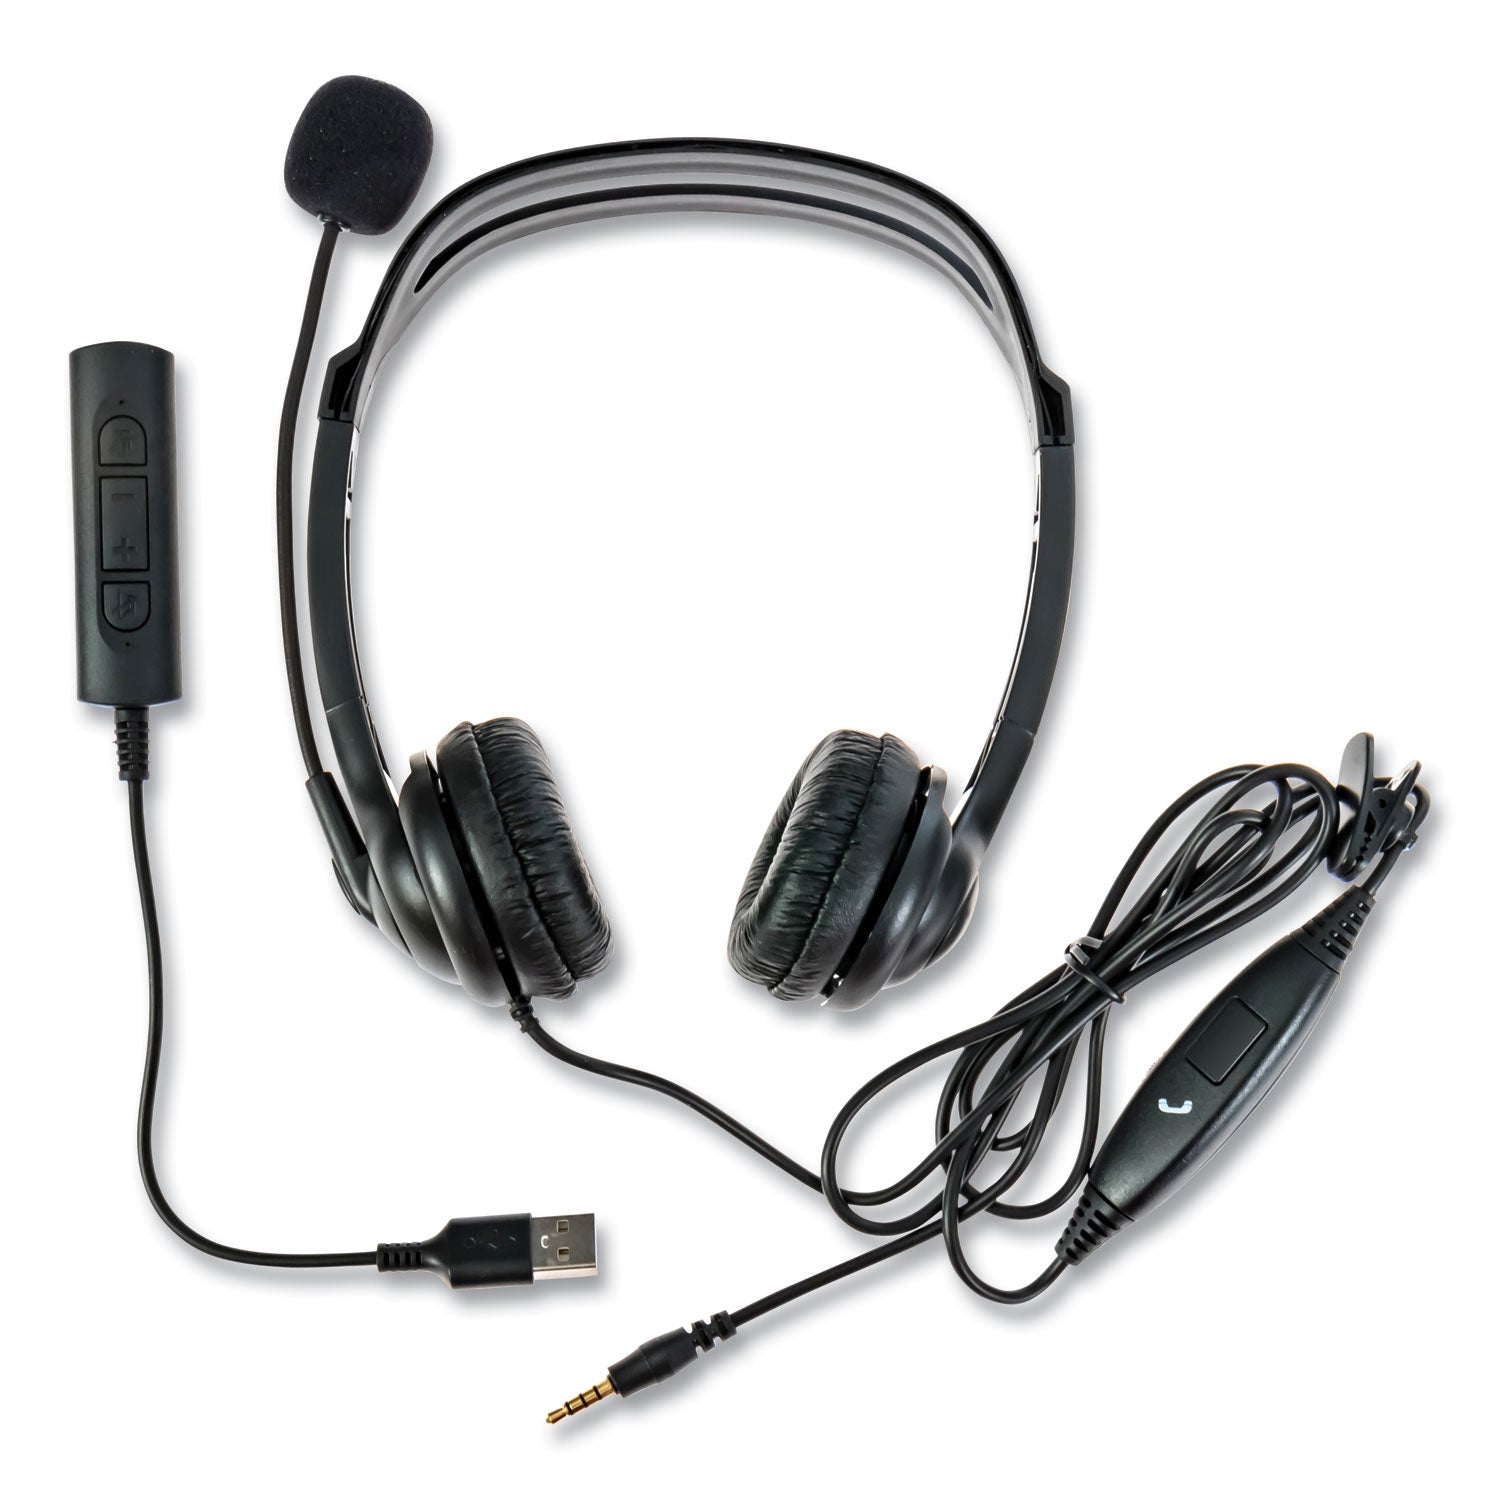 zum3500-binaural-over-the-head-usb-headset-black_sptzum3500 - 1